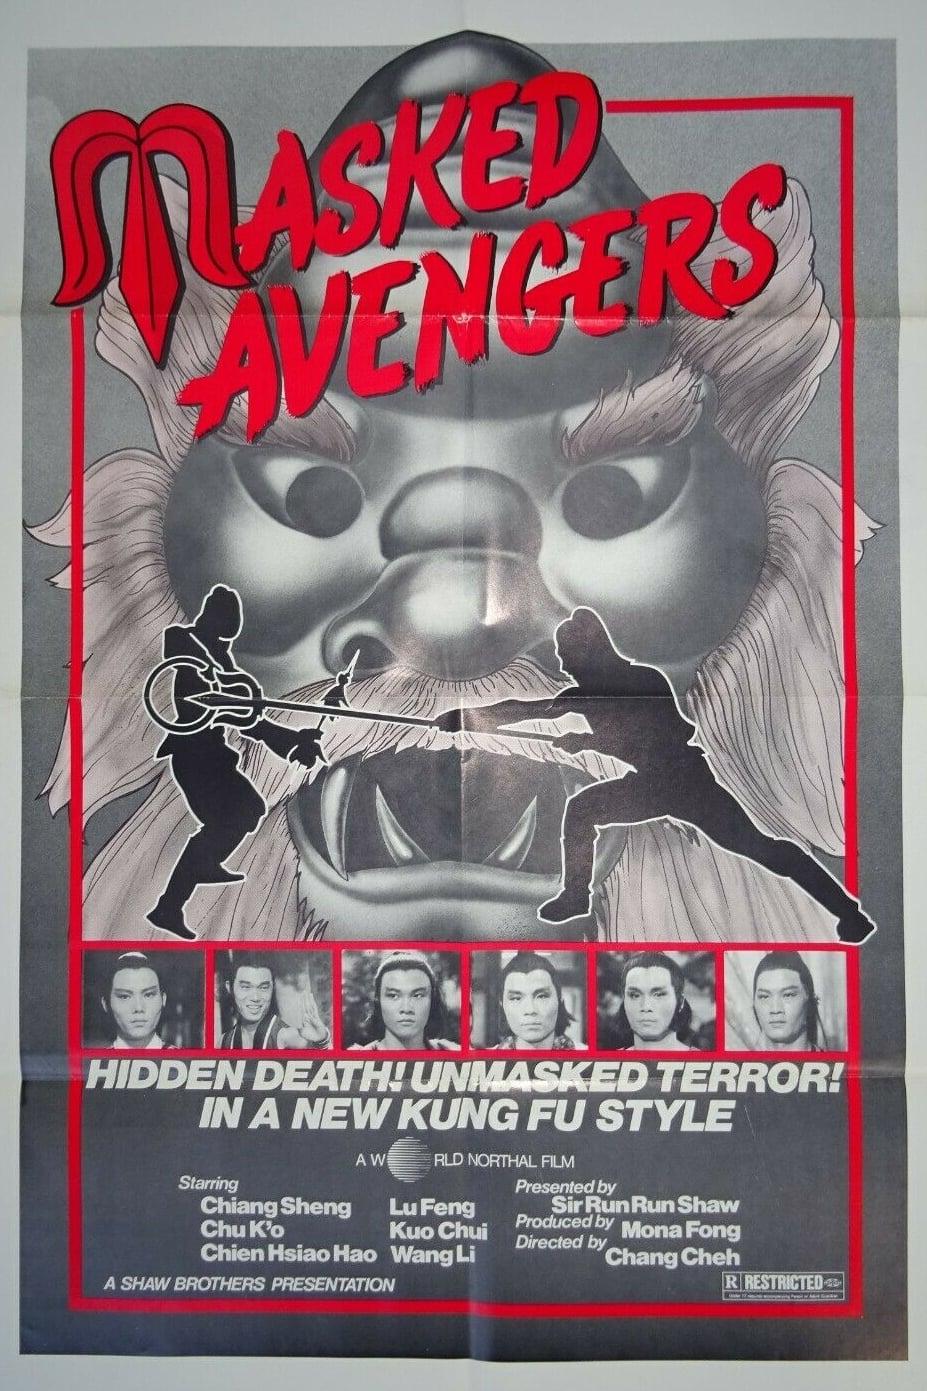 Masked Avengers poster